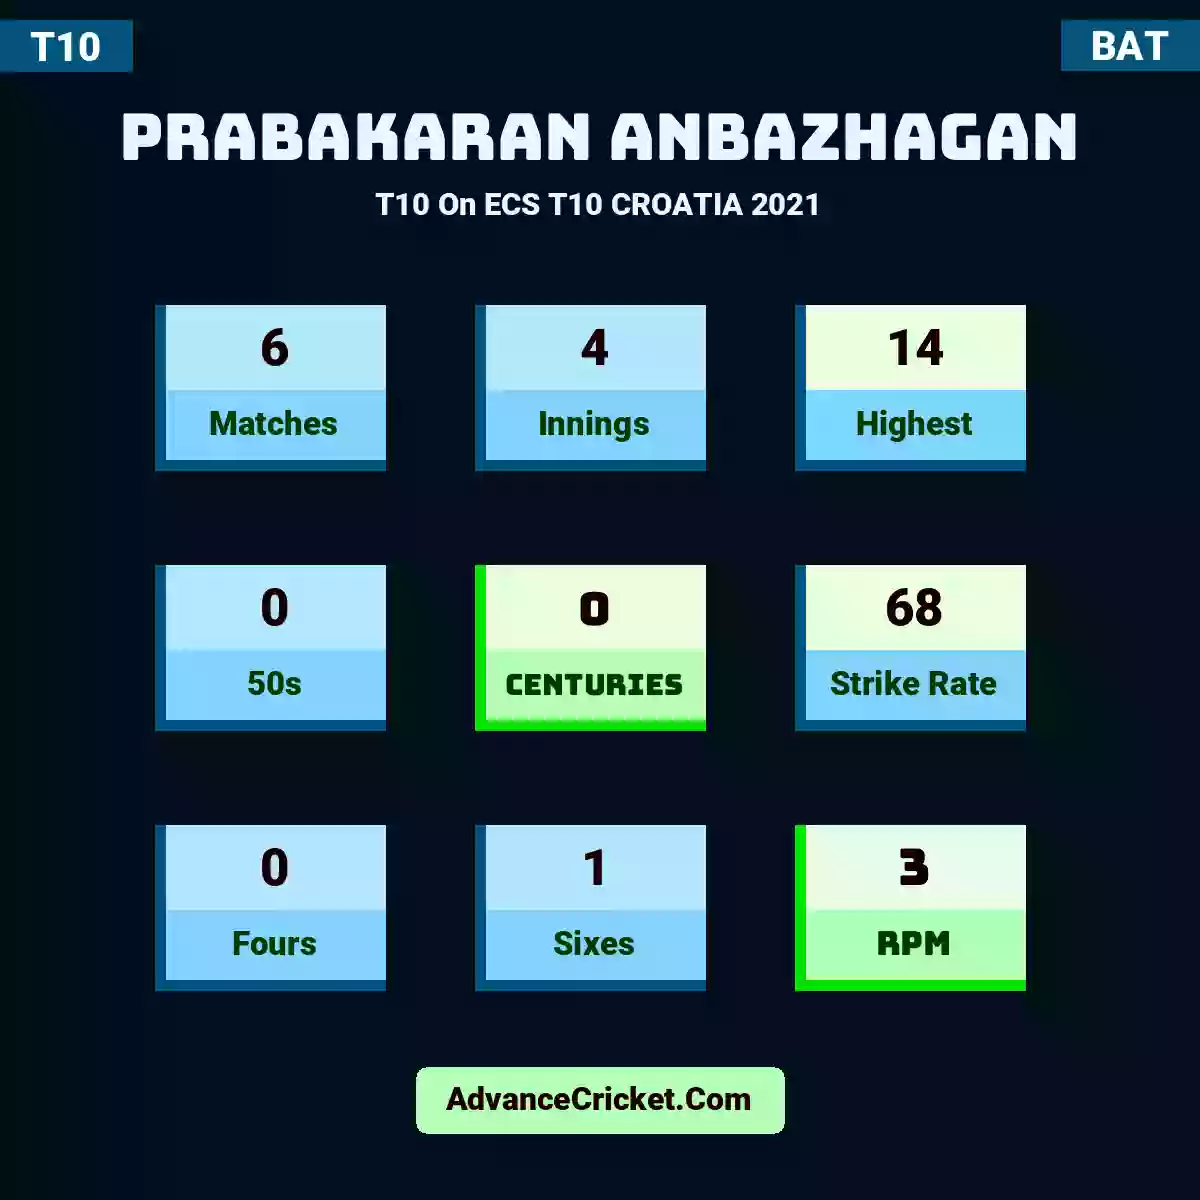 Prabakaran Anbazhagan T10  On ECS T10 CROATIA 2021, Prabakaran Anbazhagan played 6 matches, scored 14 runs as highest, 0 half-centuries, and 0 centuries, with a strike rate of 68. P.Anbazhagan hit 0 fours and 1 sixes, with an RPM of 3.